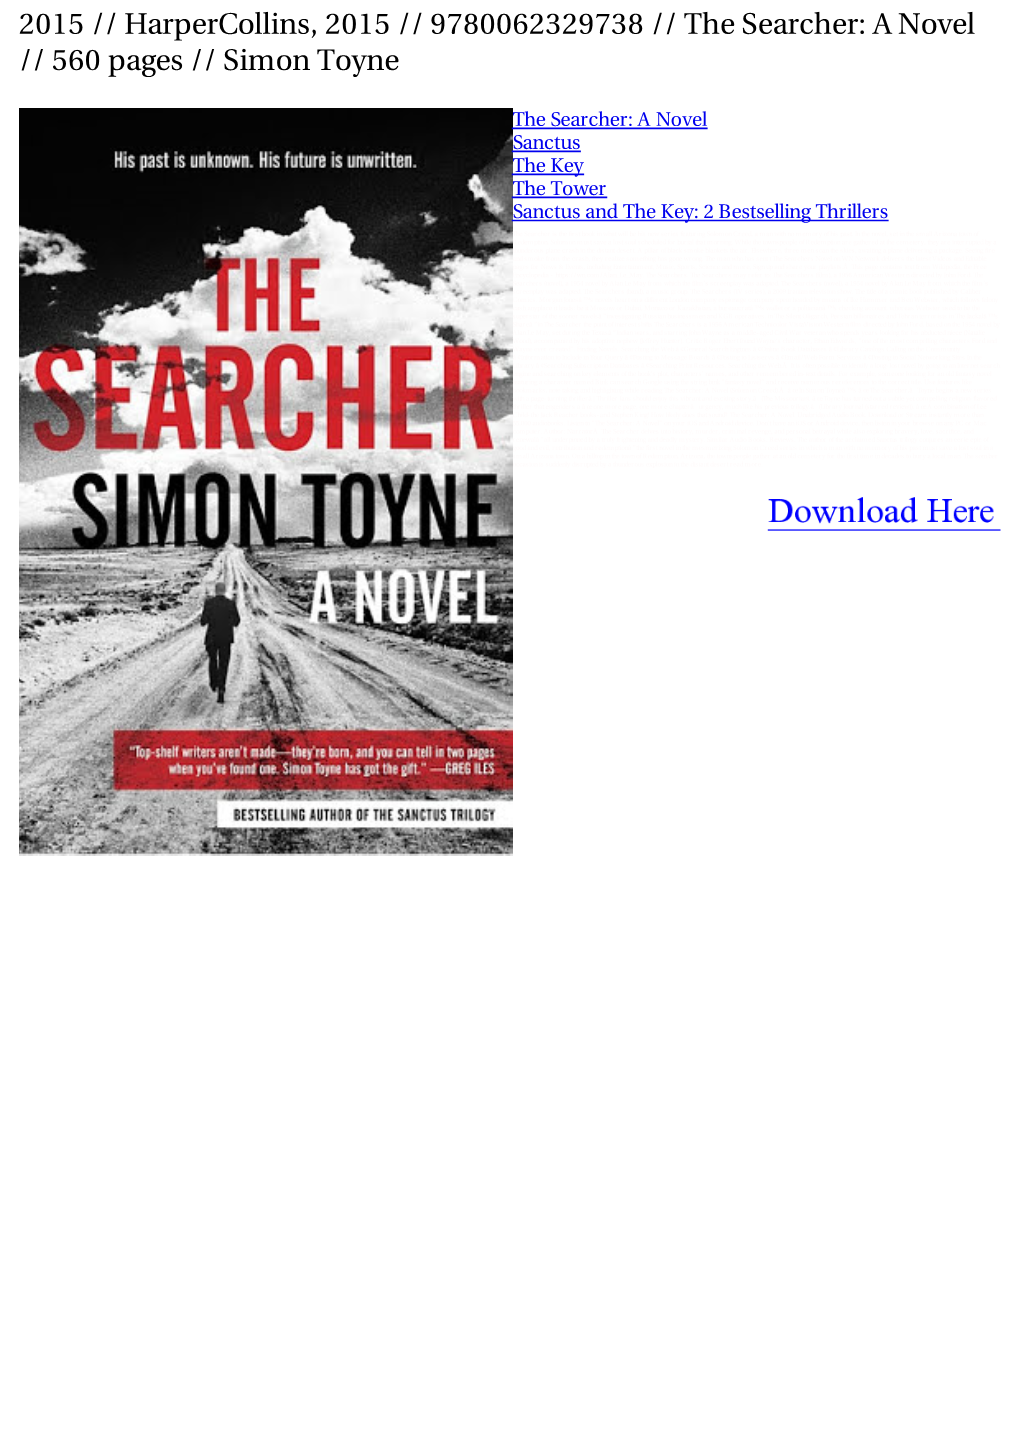 2015 // Harpercollins, 2015 // 9780062329738 // the Searcher: a Novel // 560 Pages // Simon Toyne